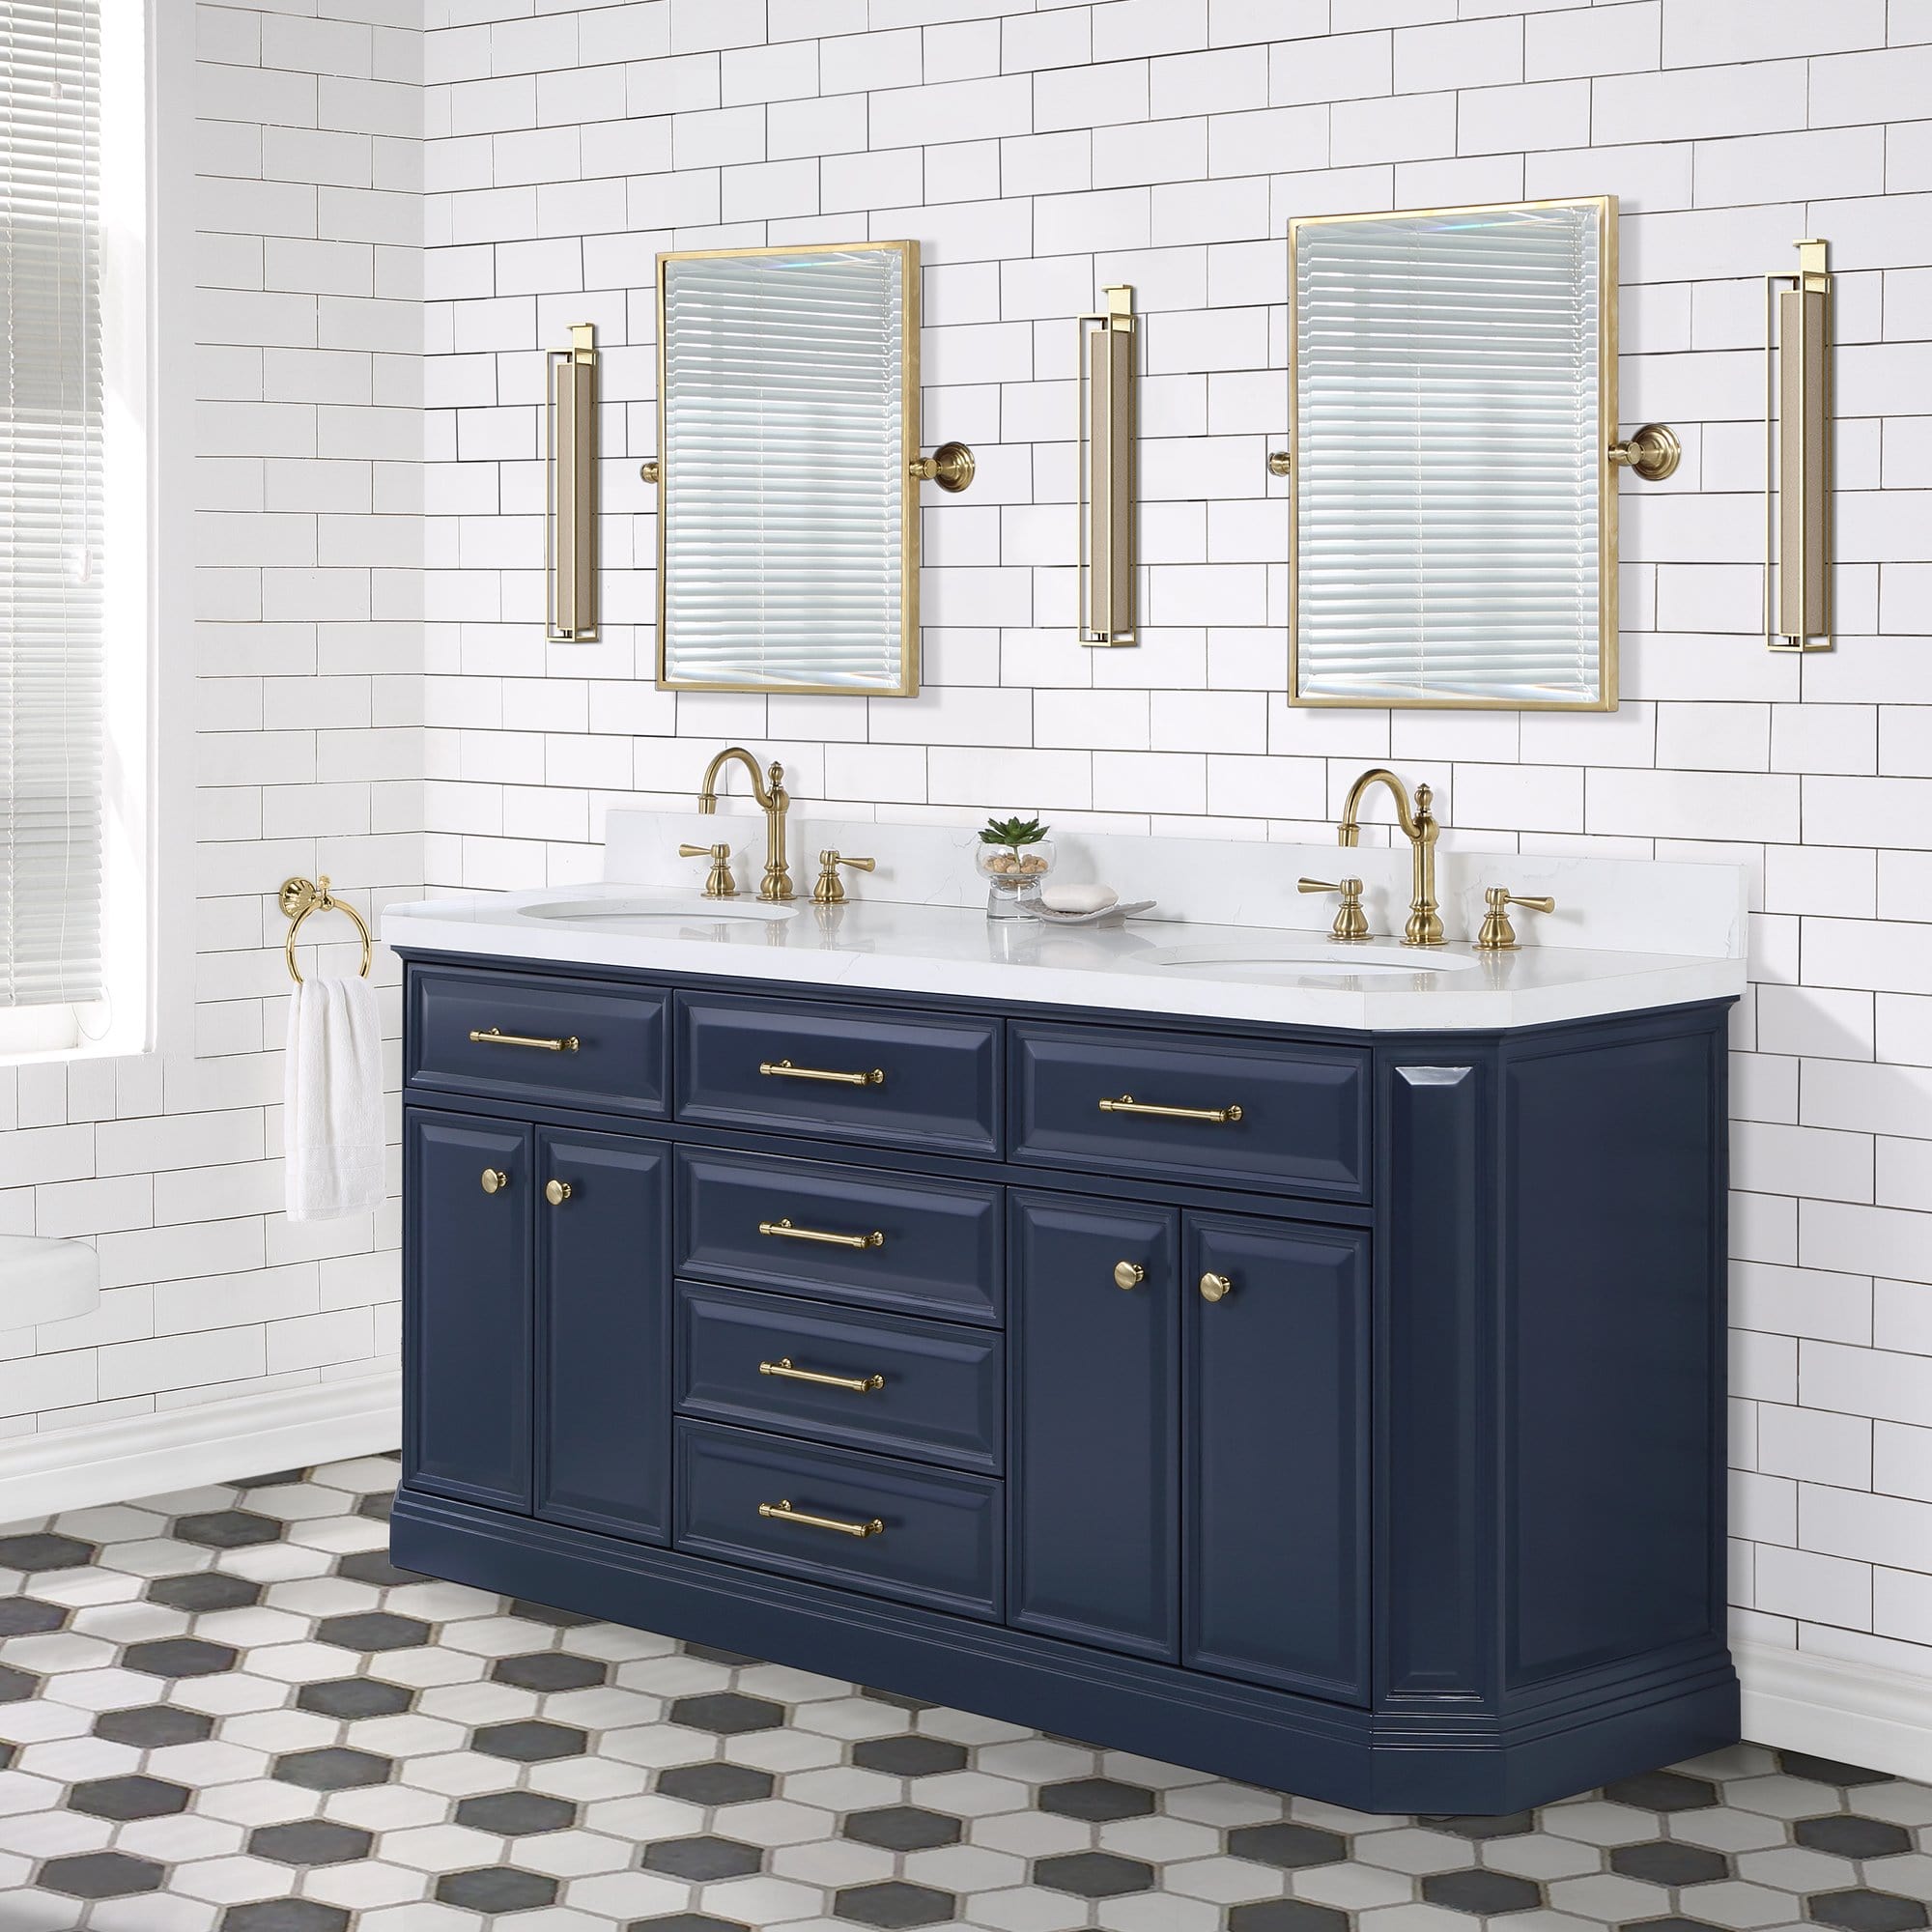 Water Creation Palace 72 In. Double Sink White Quartz Countertop Vanity in Monarch Blue - Molaix732030765030Bathroom vanityPA72QZ06MB-000000000